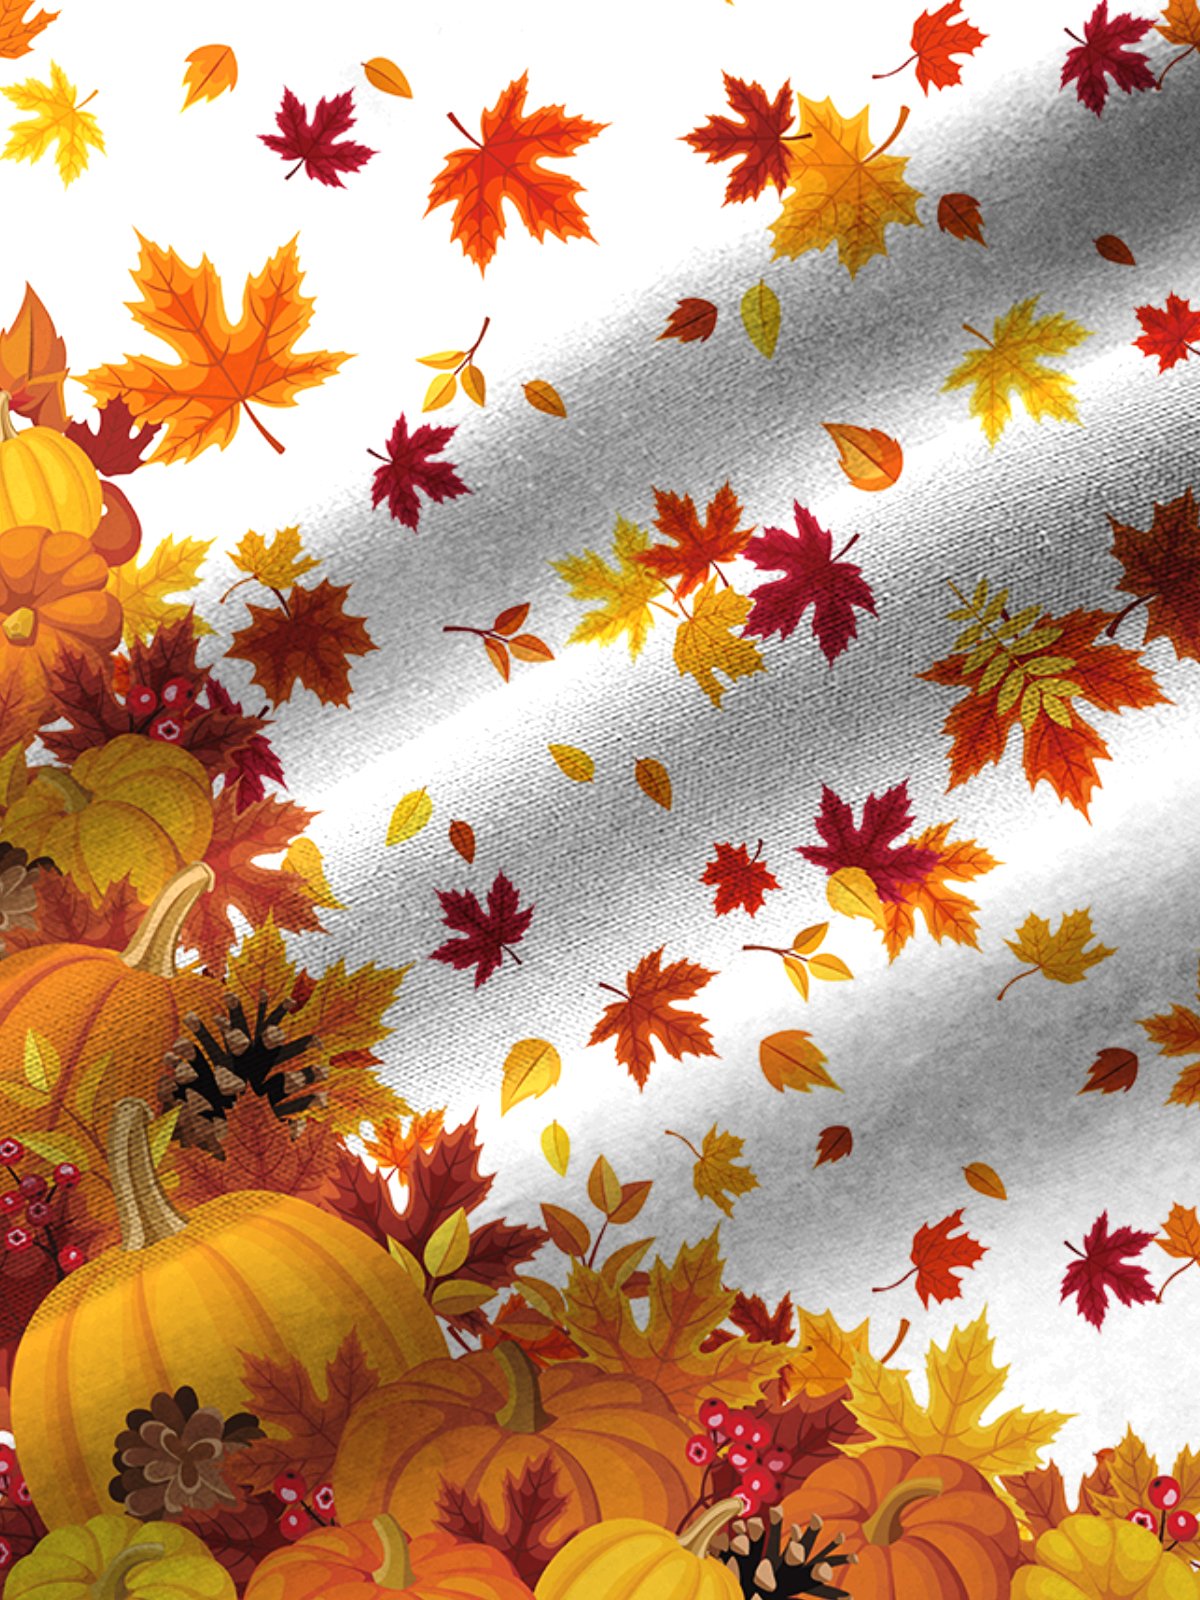 Royaura Thanksgiving Maple Leaf Print Oversized Long Sleeve Shirt